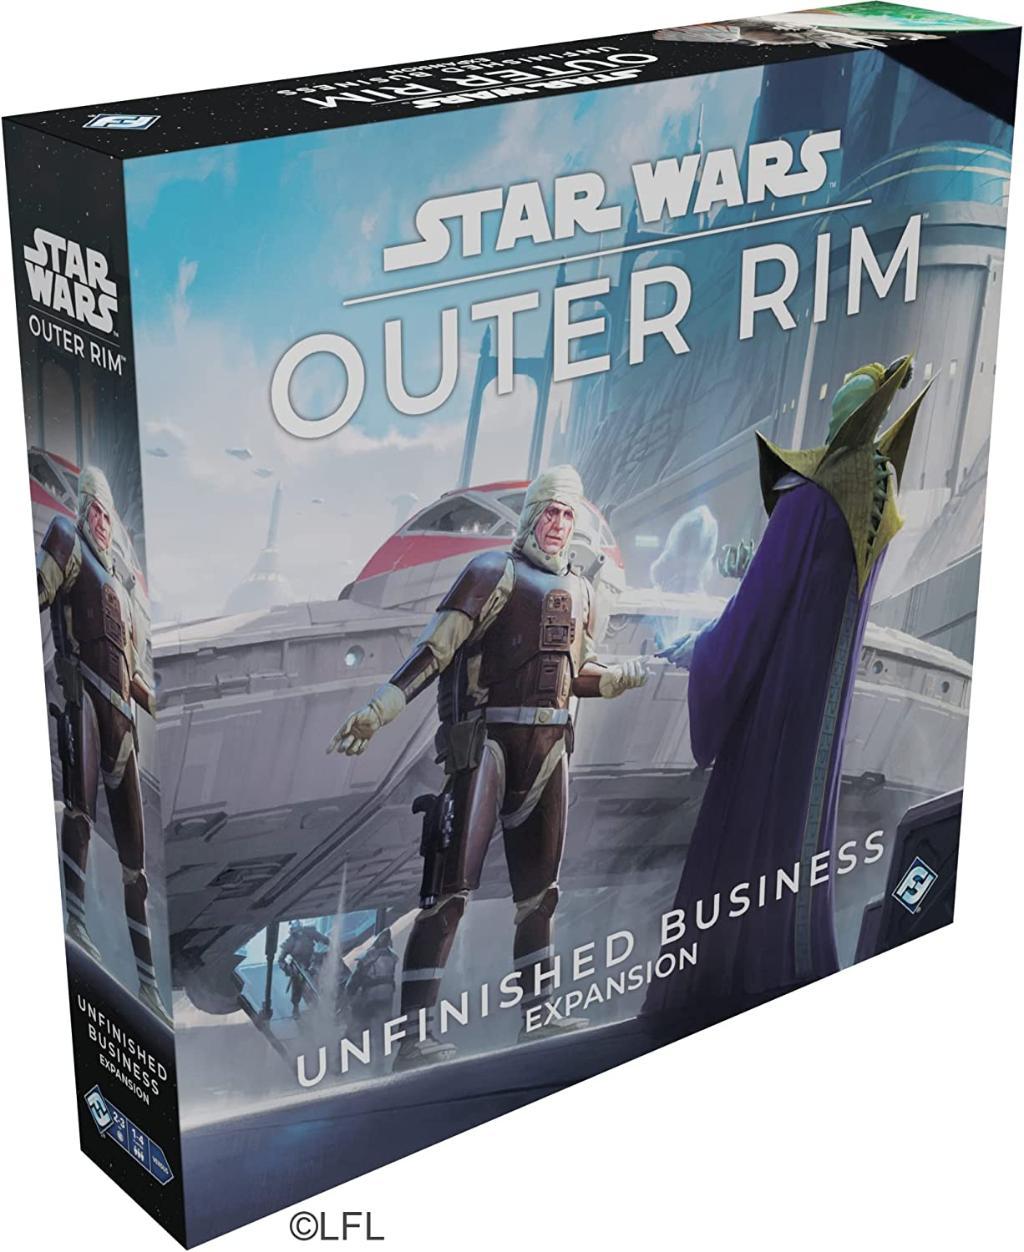 Star Wars: Bordure Extérieure - Star Wars: Outer Rim - Unfinished Business